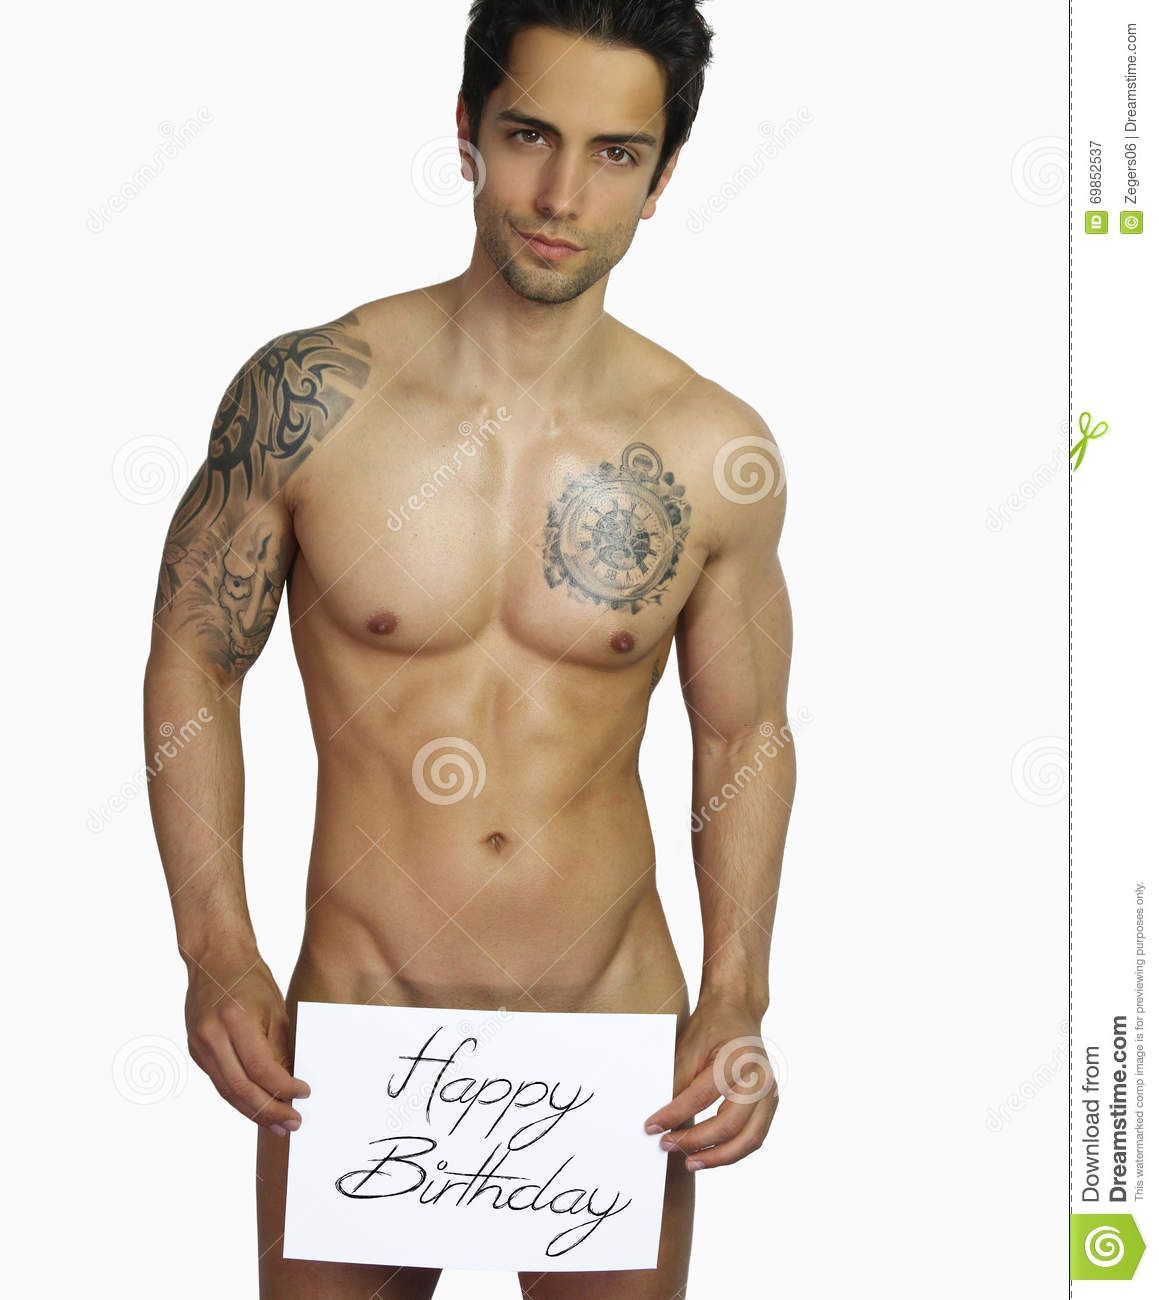 Naked Male Birthday Card Paylin Porno Telegraph